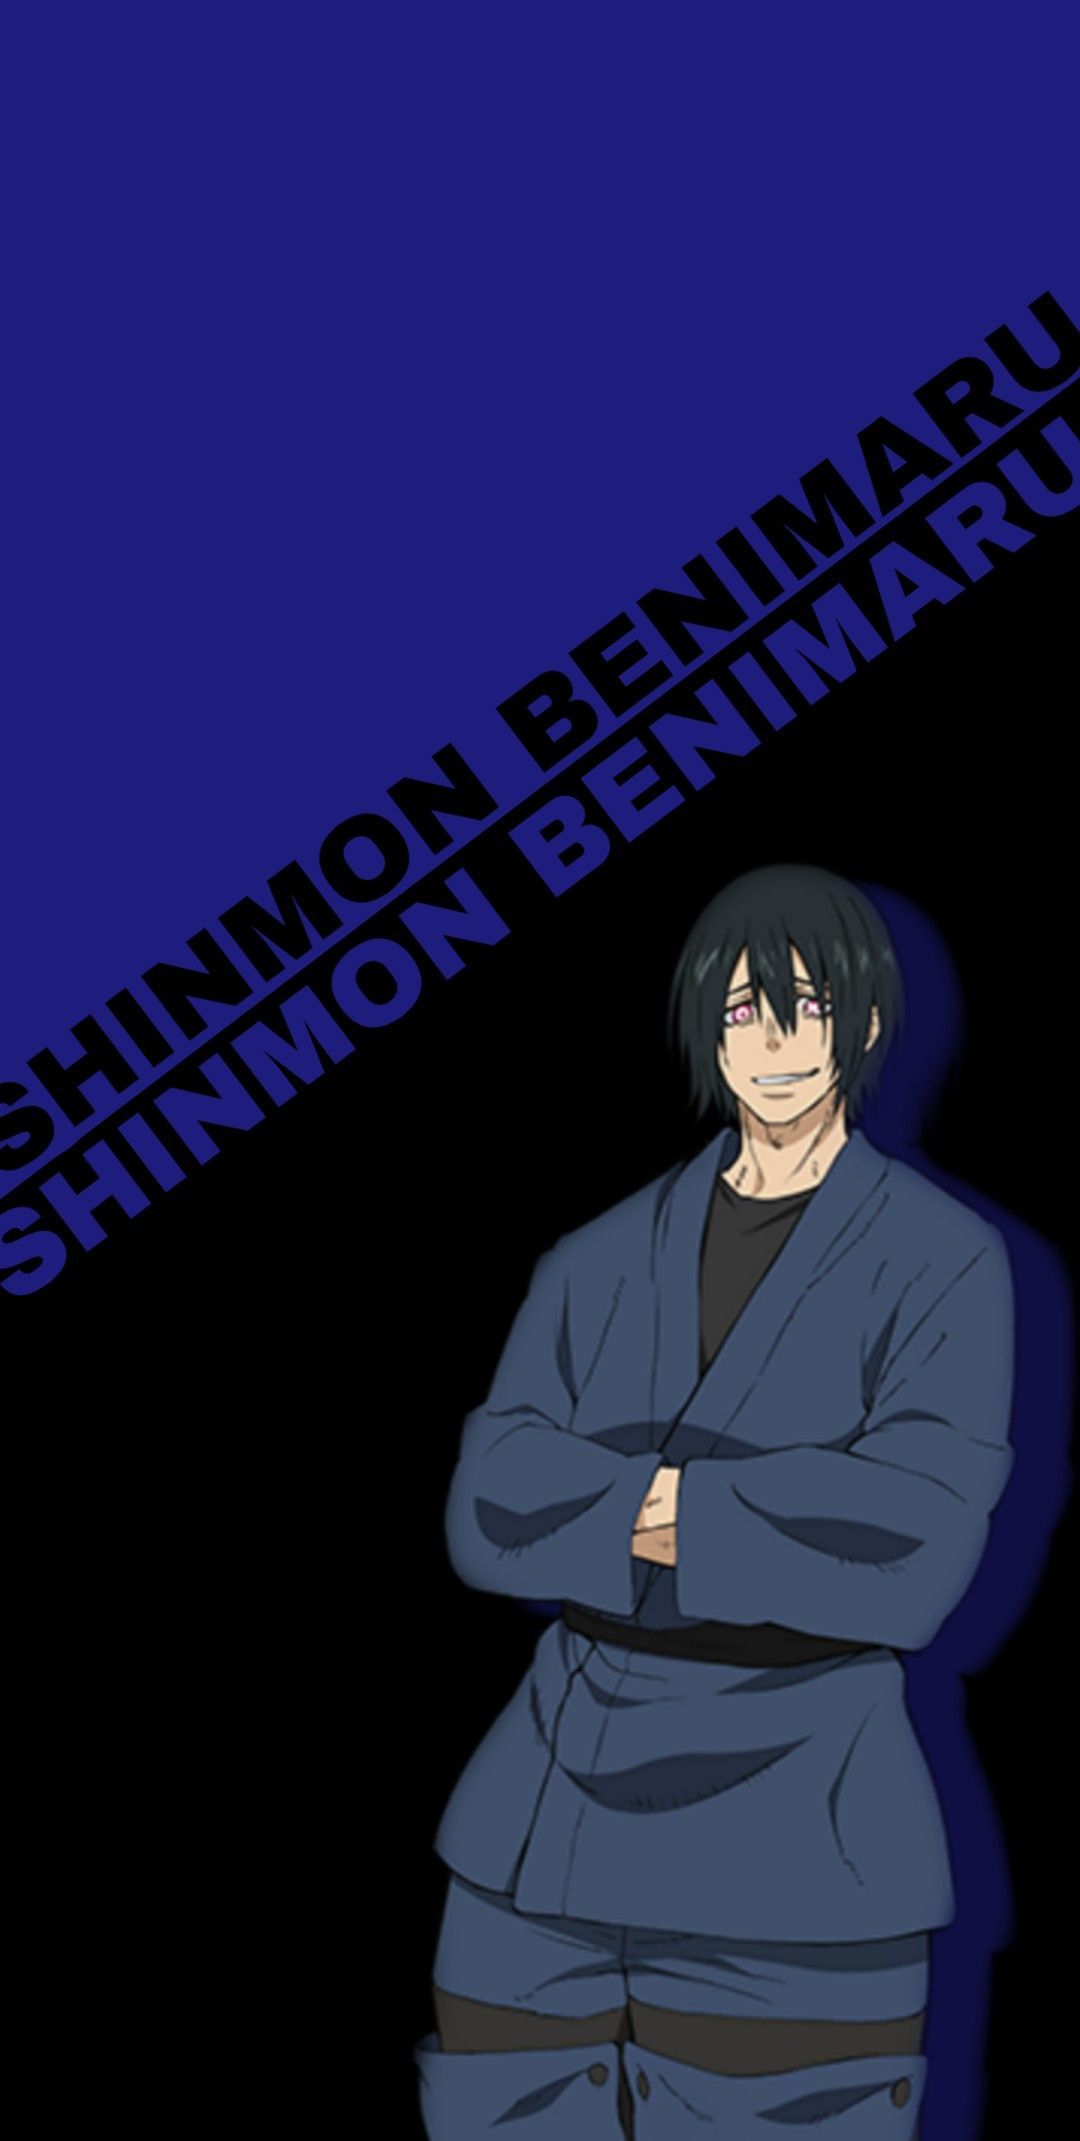 Shinmon Benimaru wallpaper. Anime wallpaper, Dark anime guys, Anime background